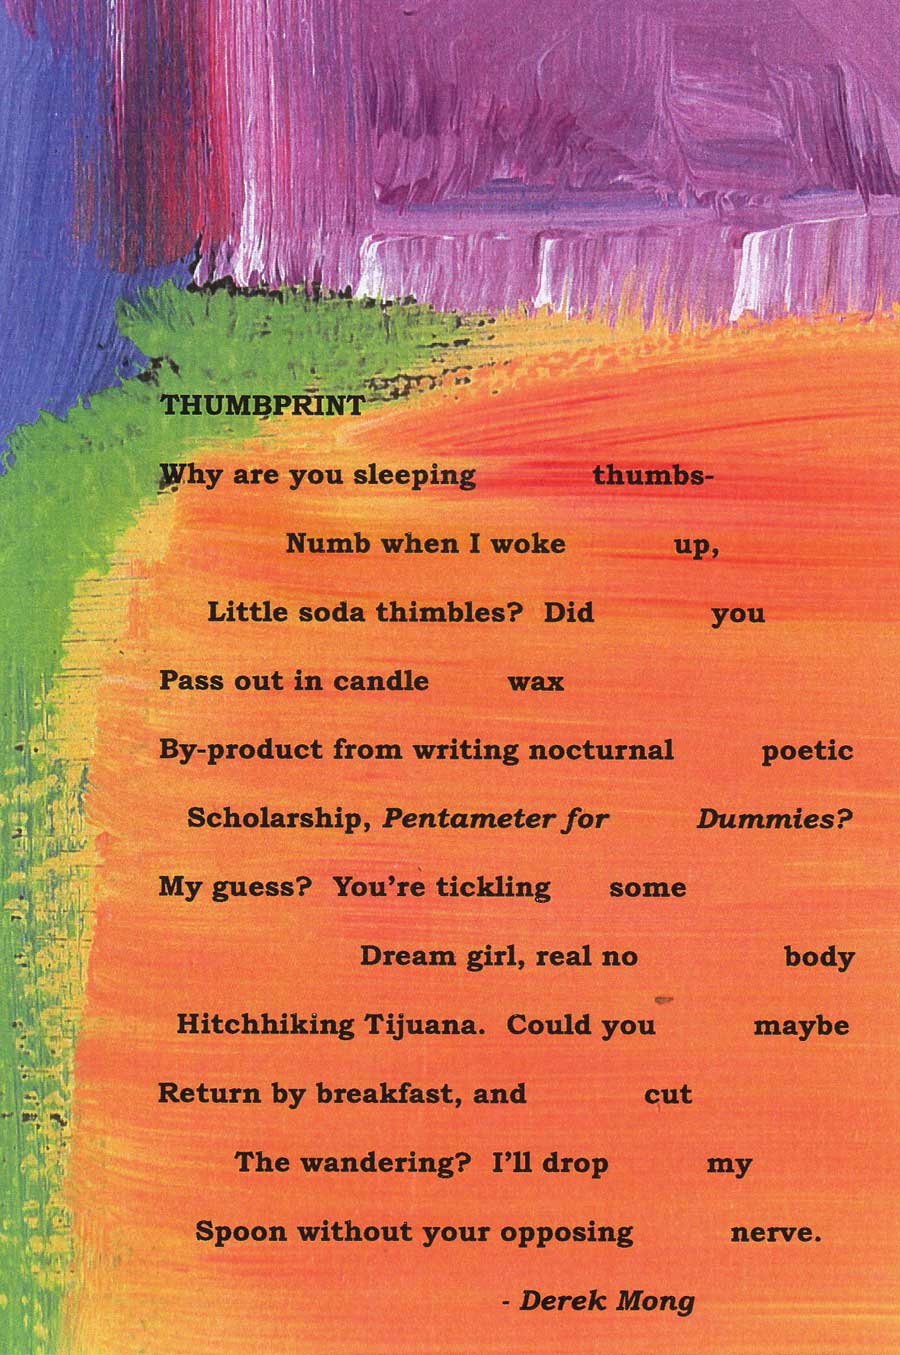 text/image of "Thumbprint"